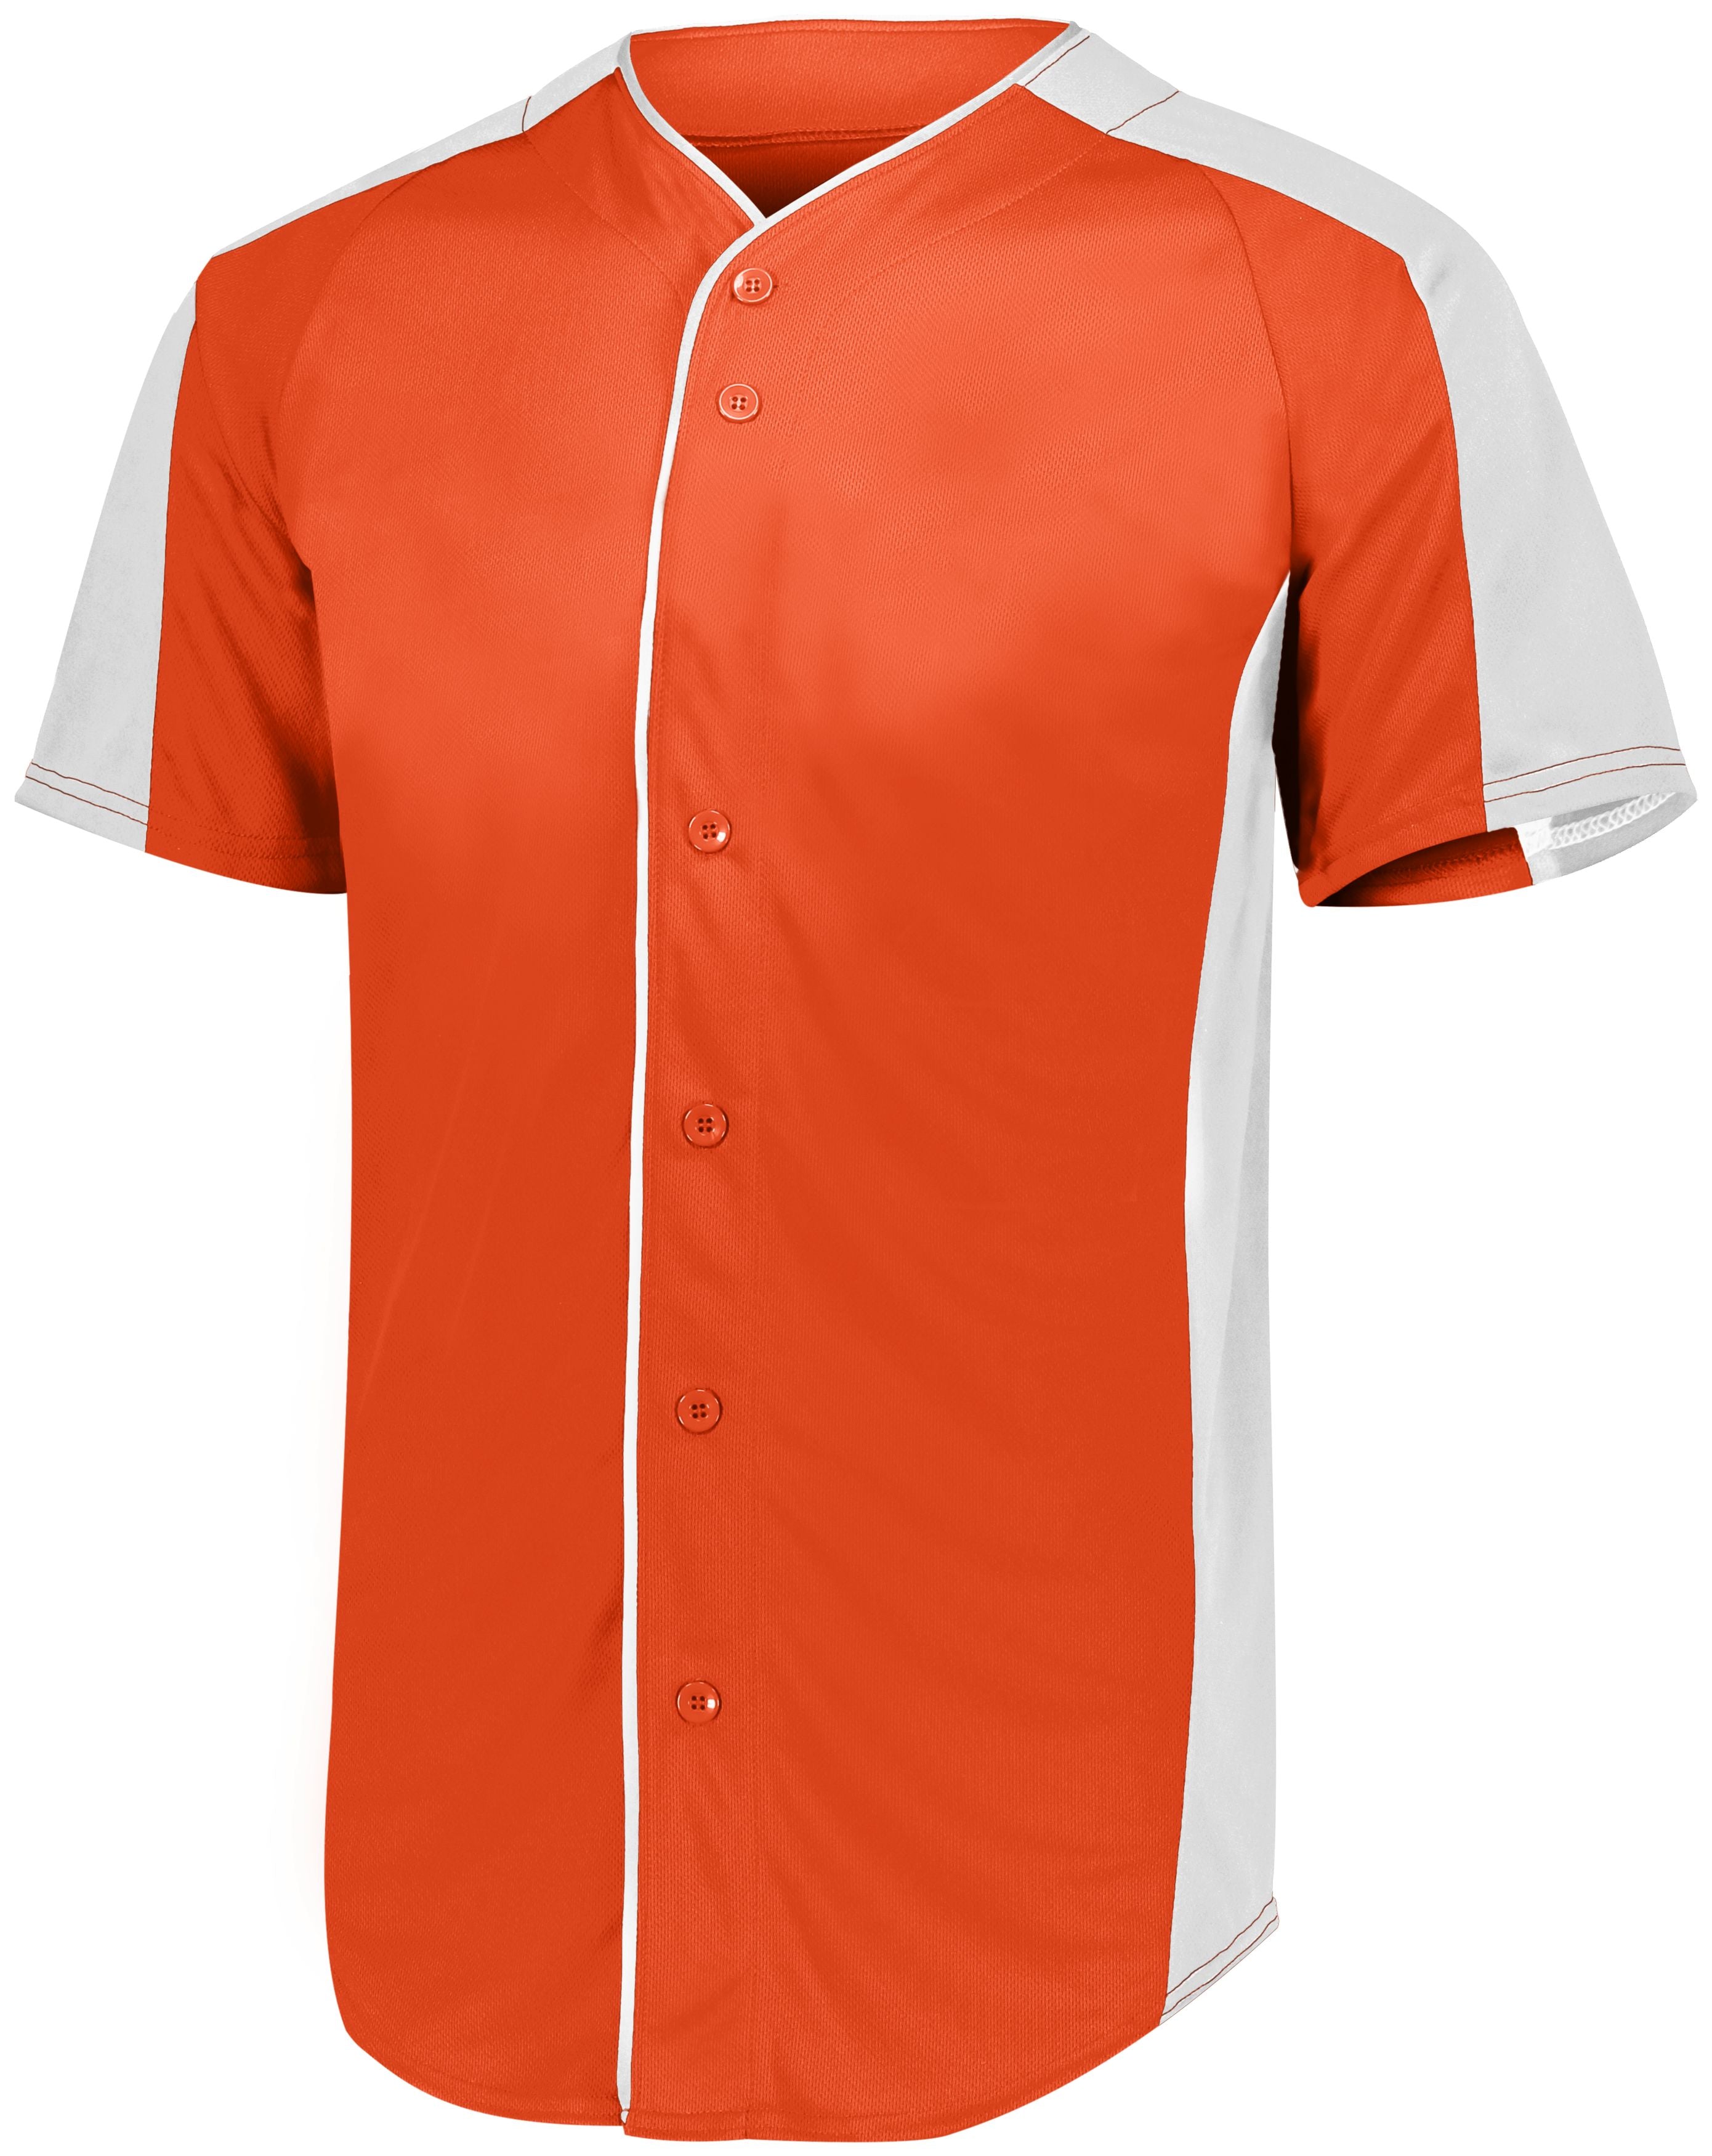 Youth Full-Button Baseball Jersey 1656